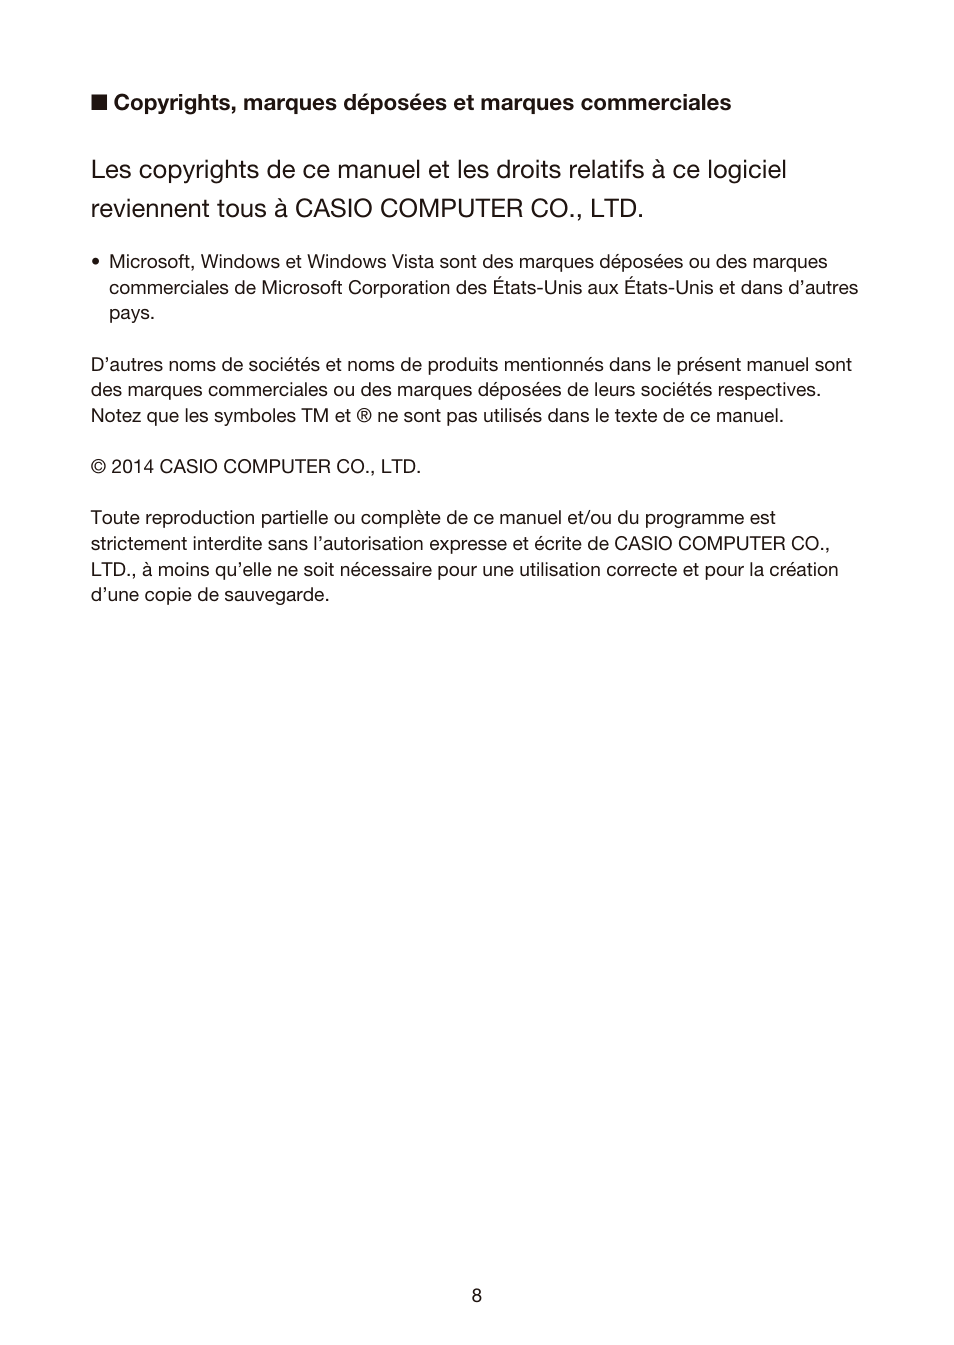 Casio STC-U10 Manuel d'utilisation | Page 9 / 51